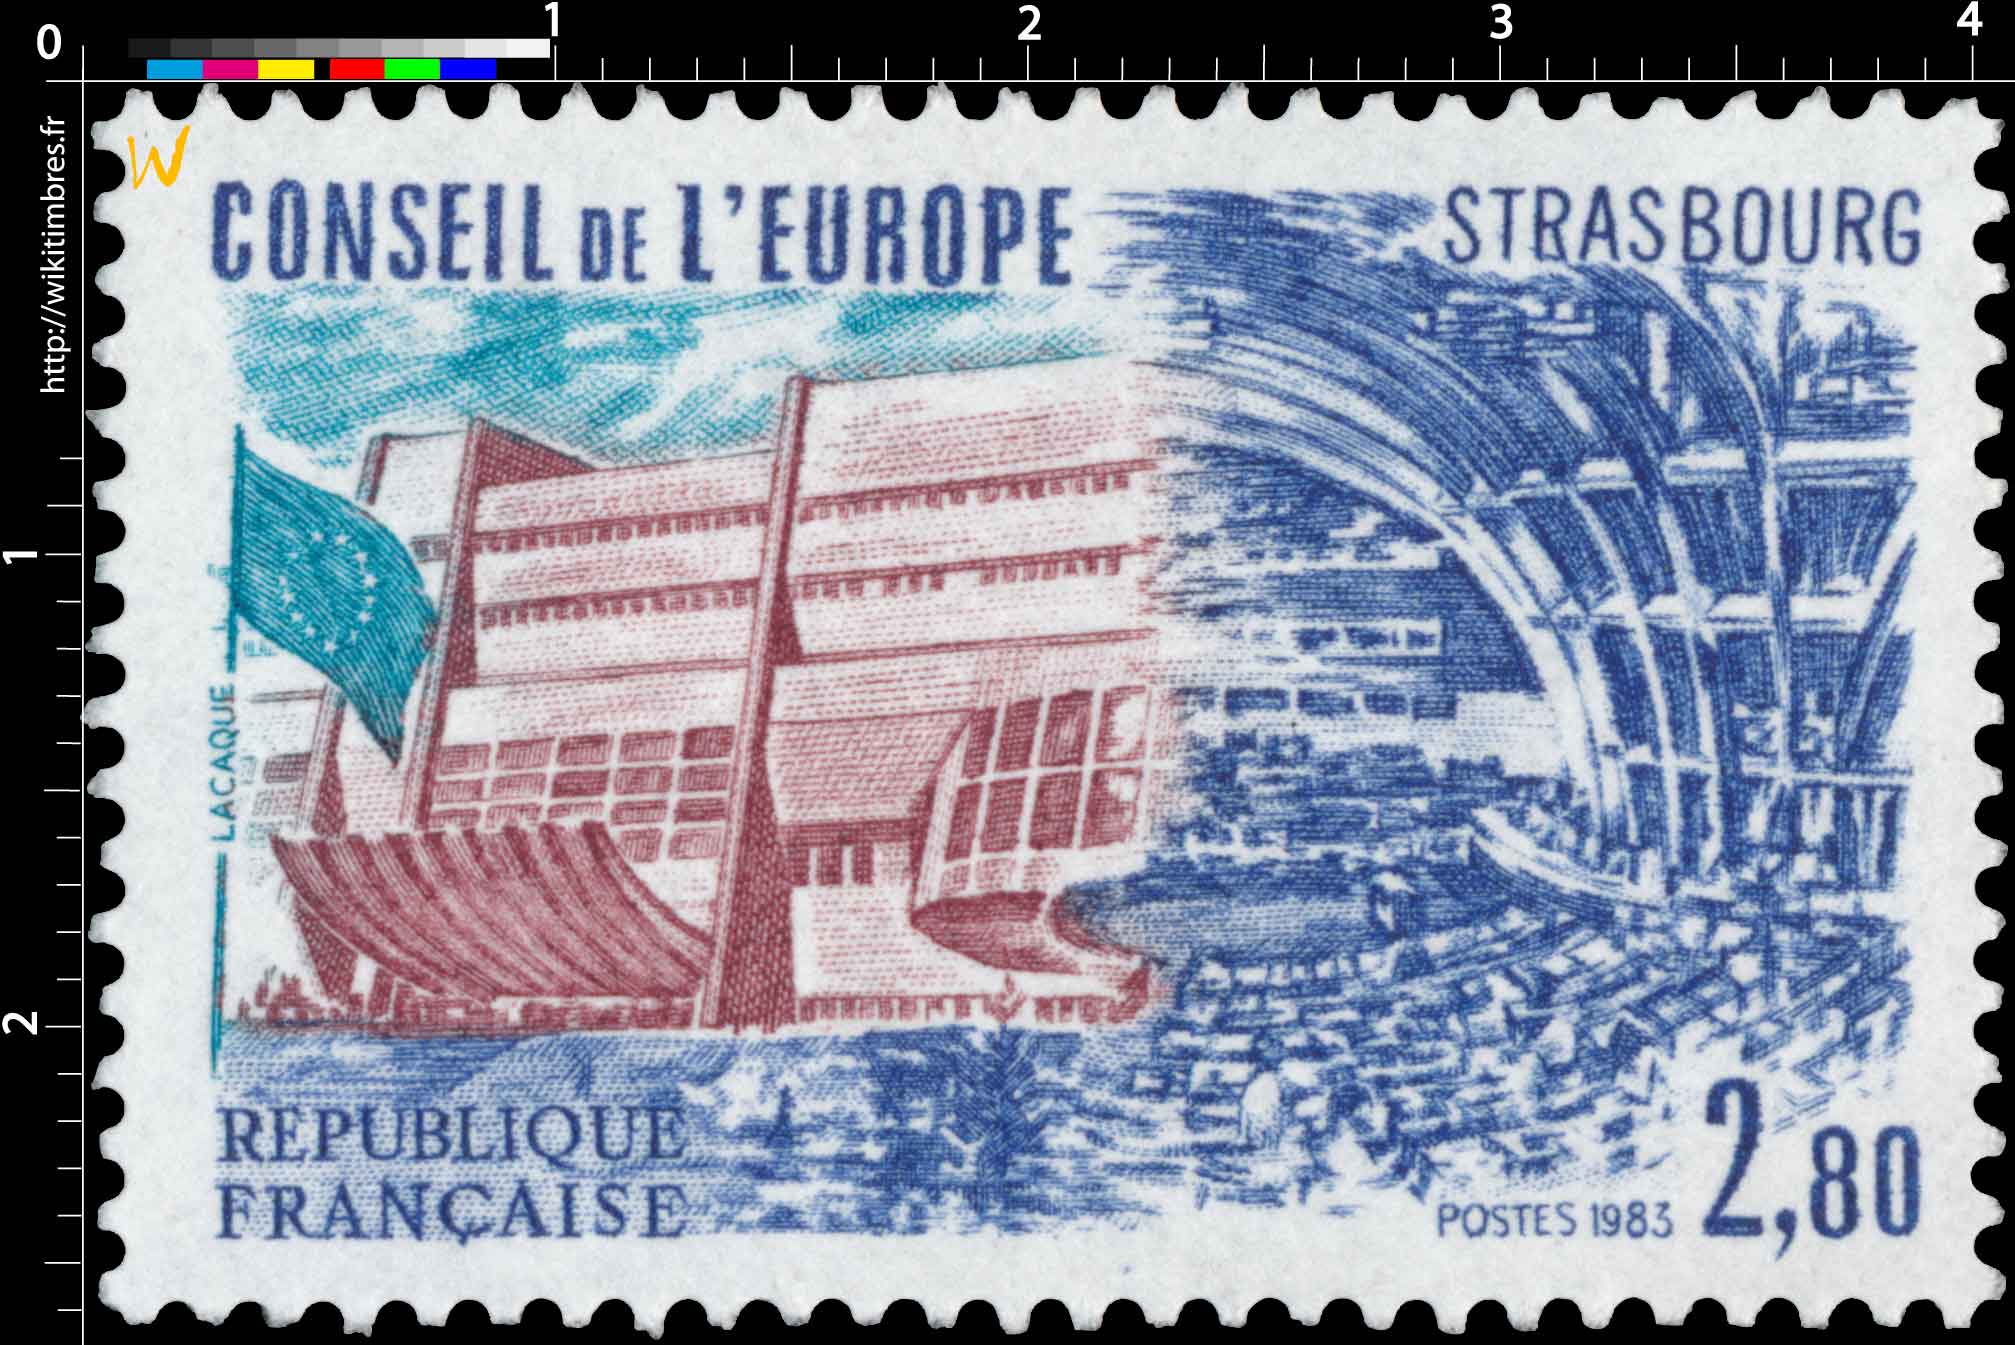 1983 CONSEIL DE L'EUROPE STRASBOURG